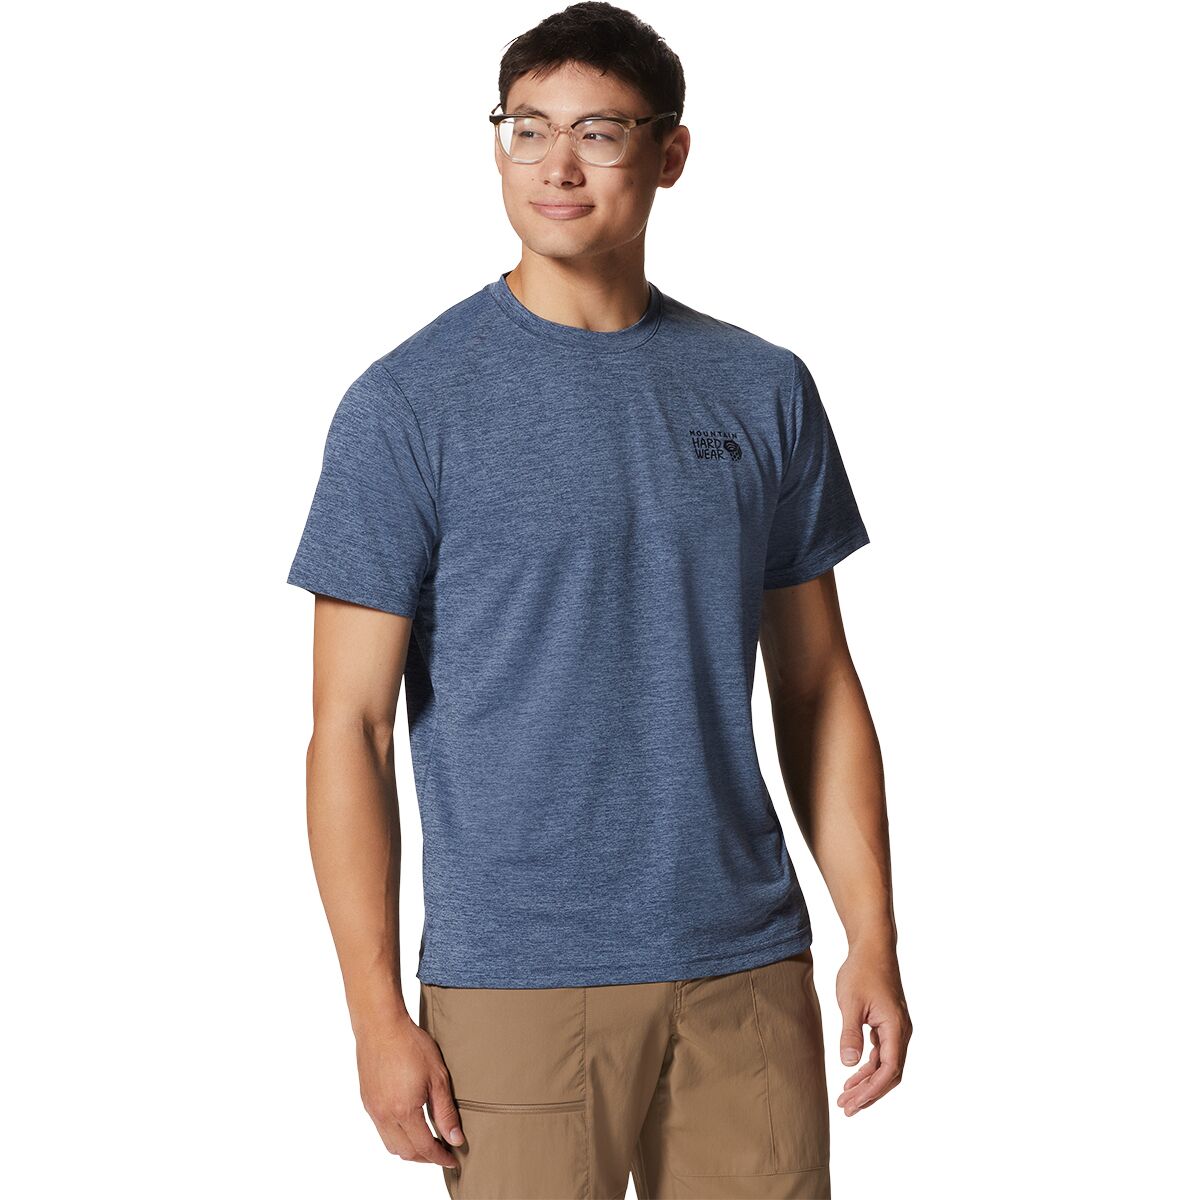 Sunblocker Short-Sleeve Shirt - Men